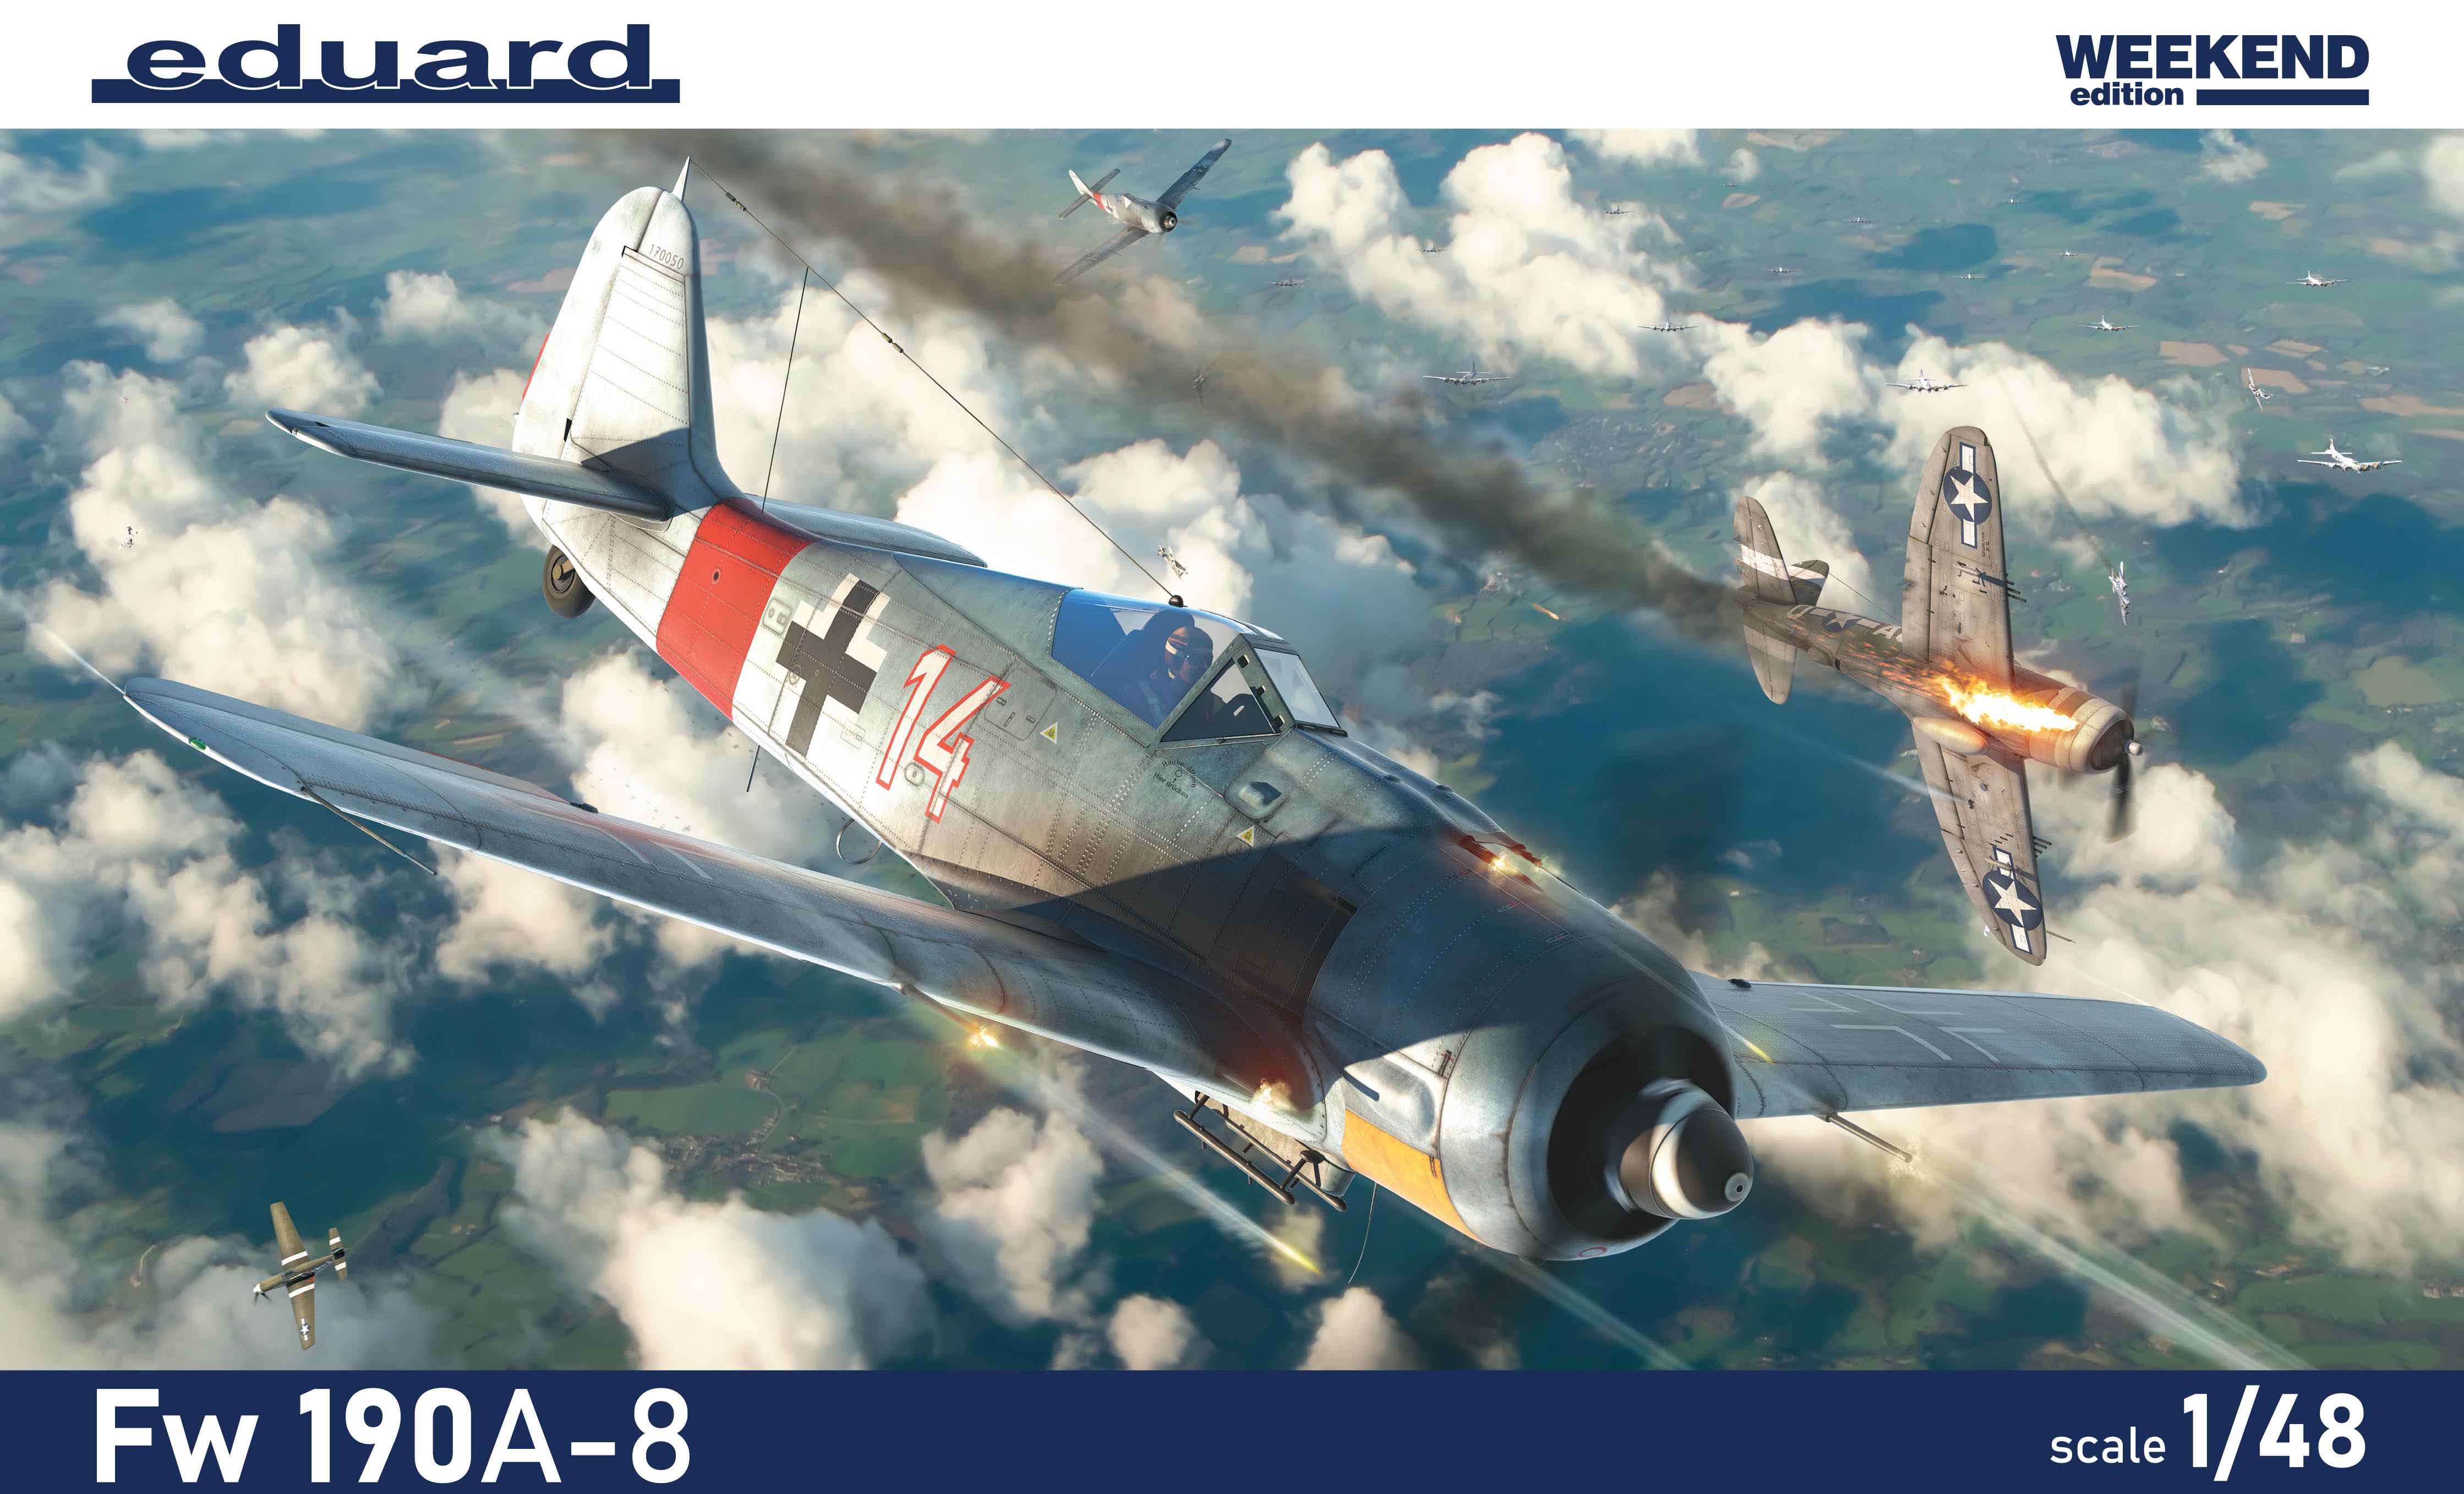 Model kit 1/48 Focke-Wulf Fw-190A-8 Weekend edition (Eduard kits)